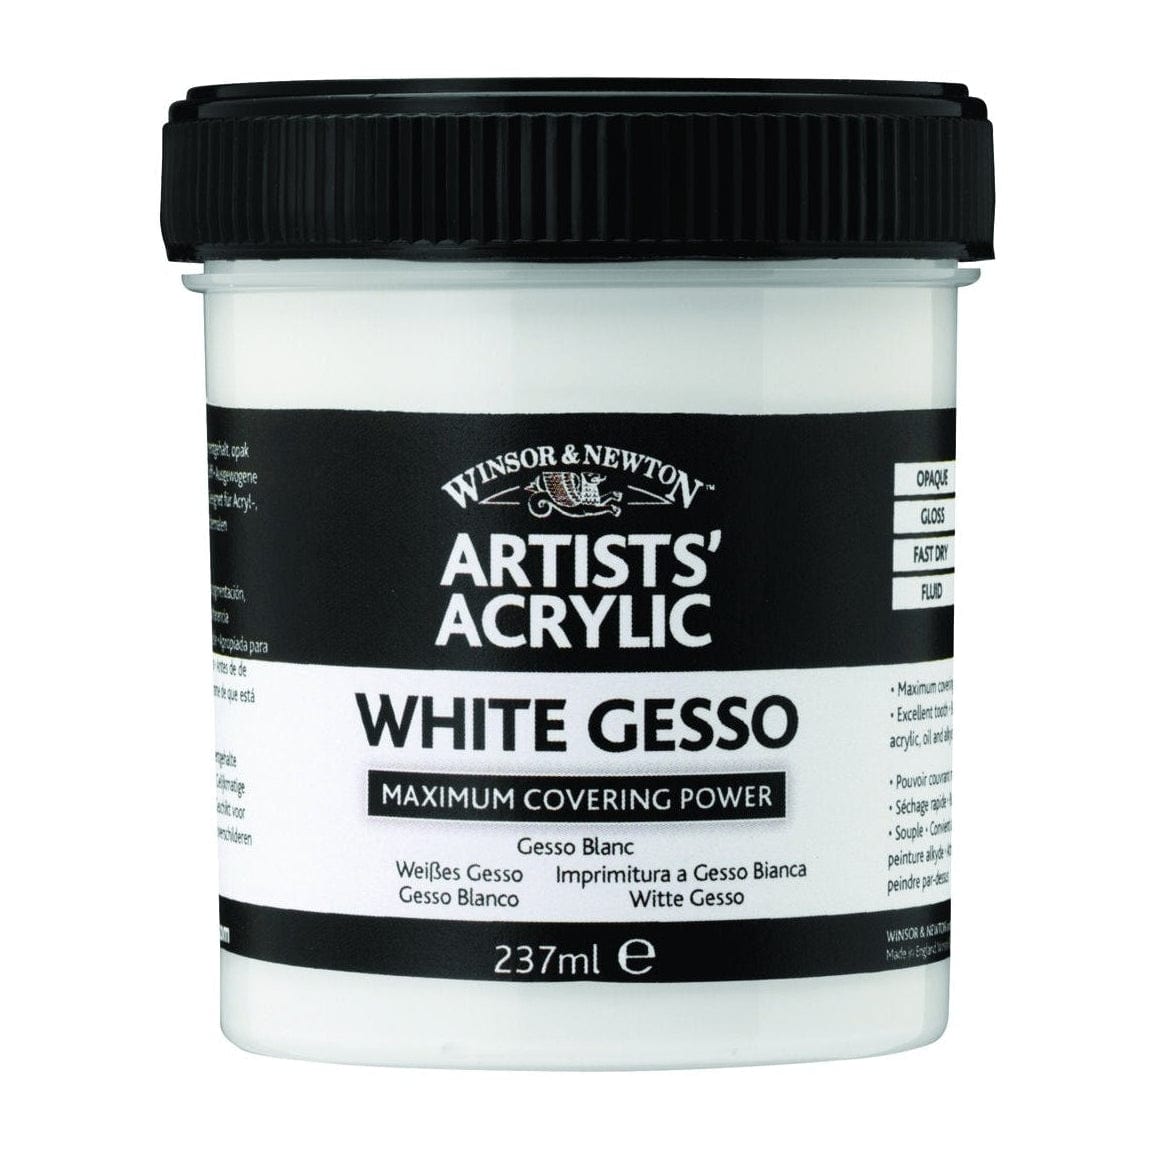 Winsor & Newton Artists' Acrylic Gesso, White, 237 ml.